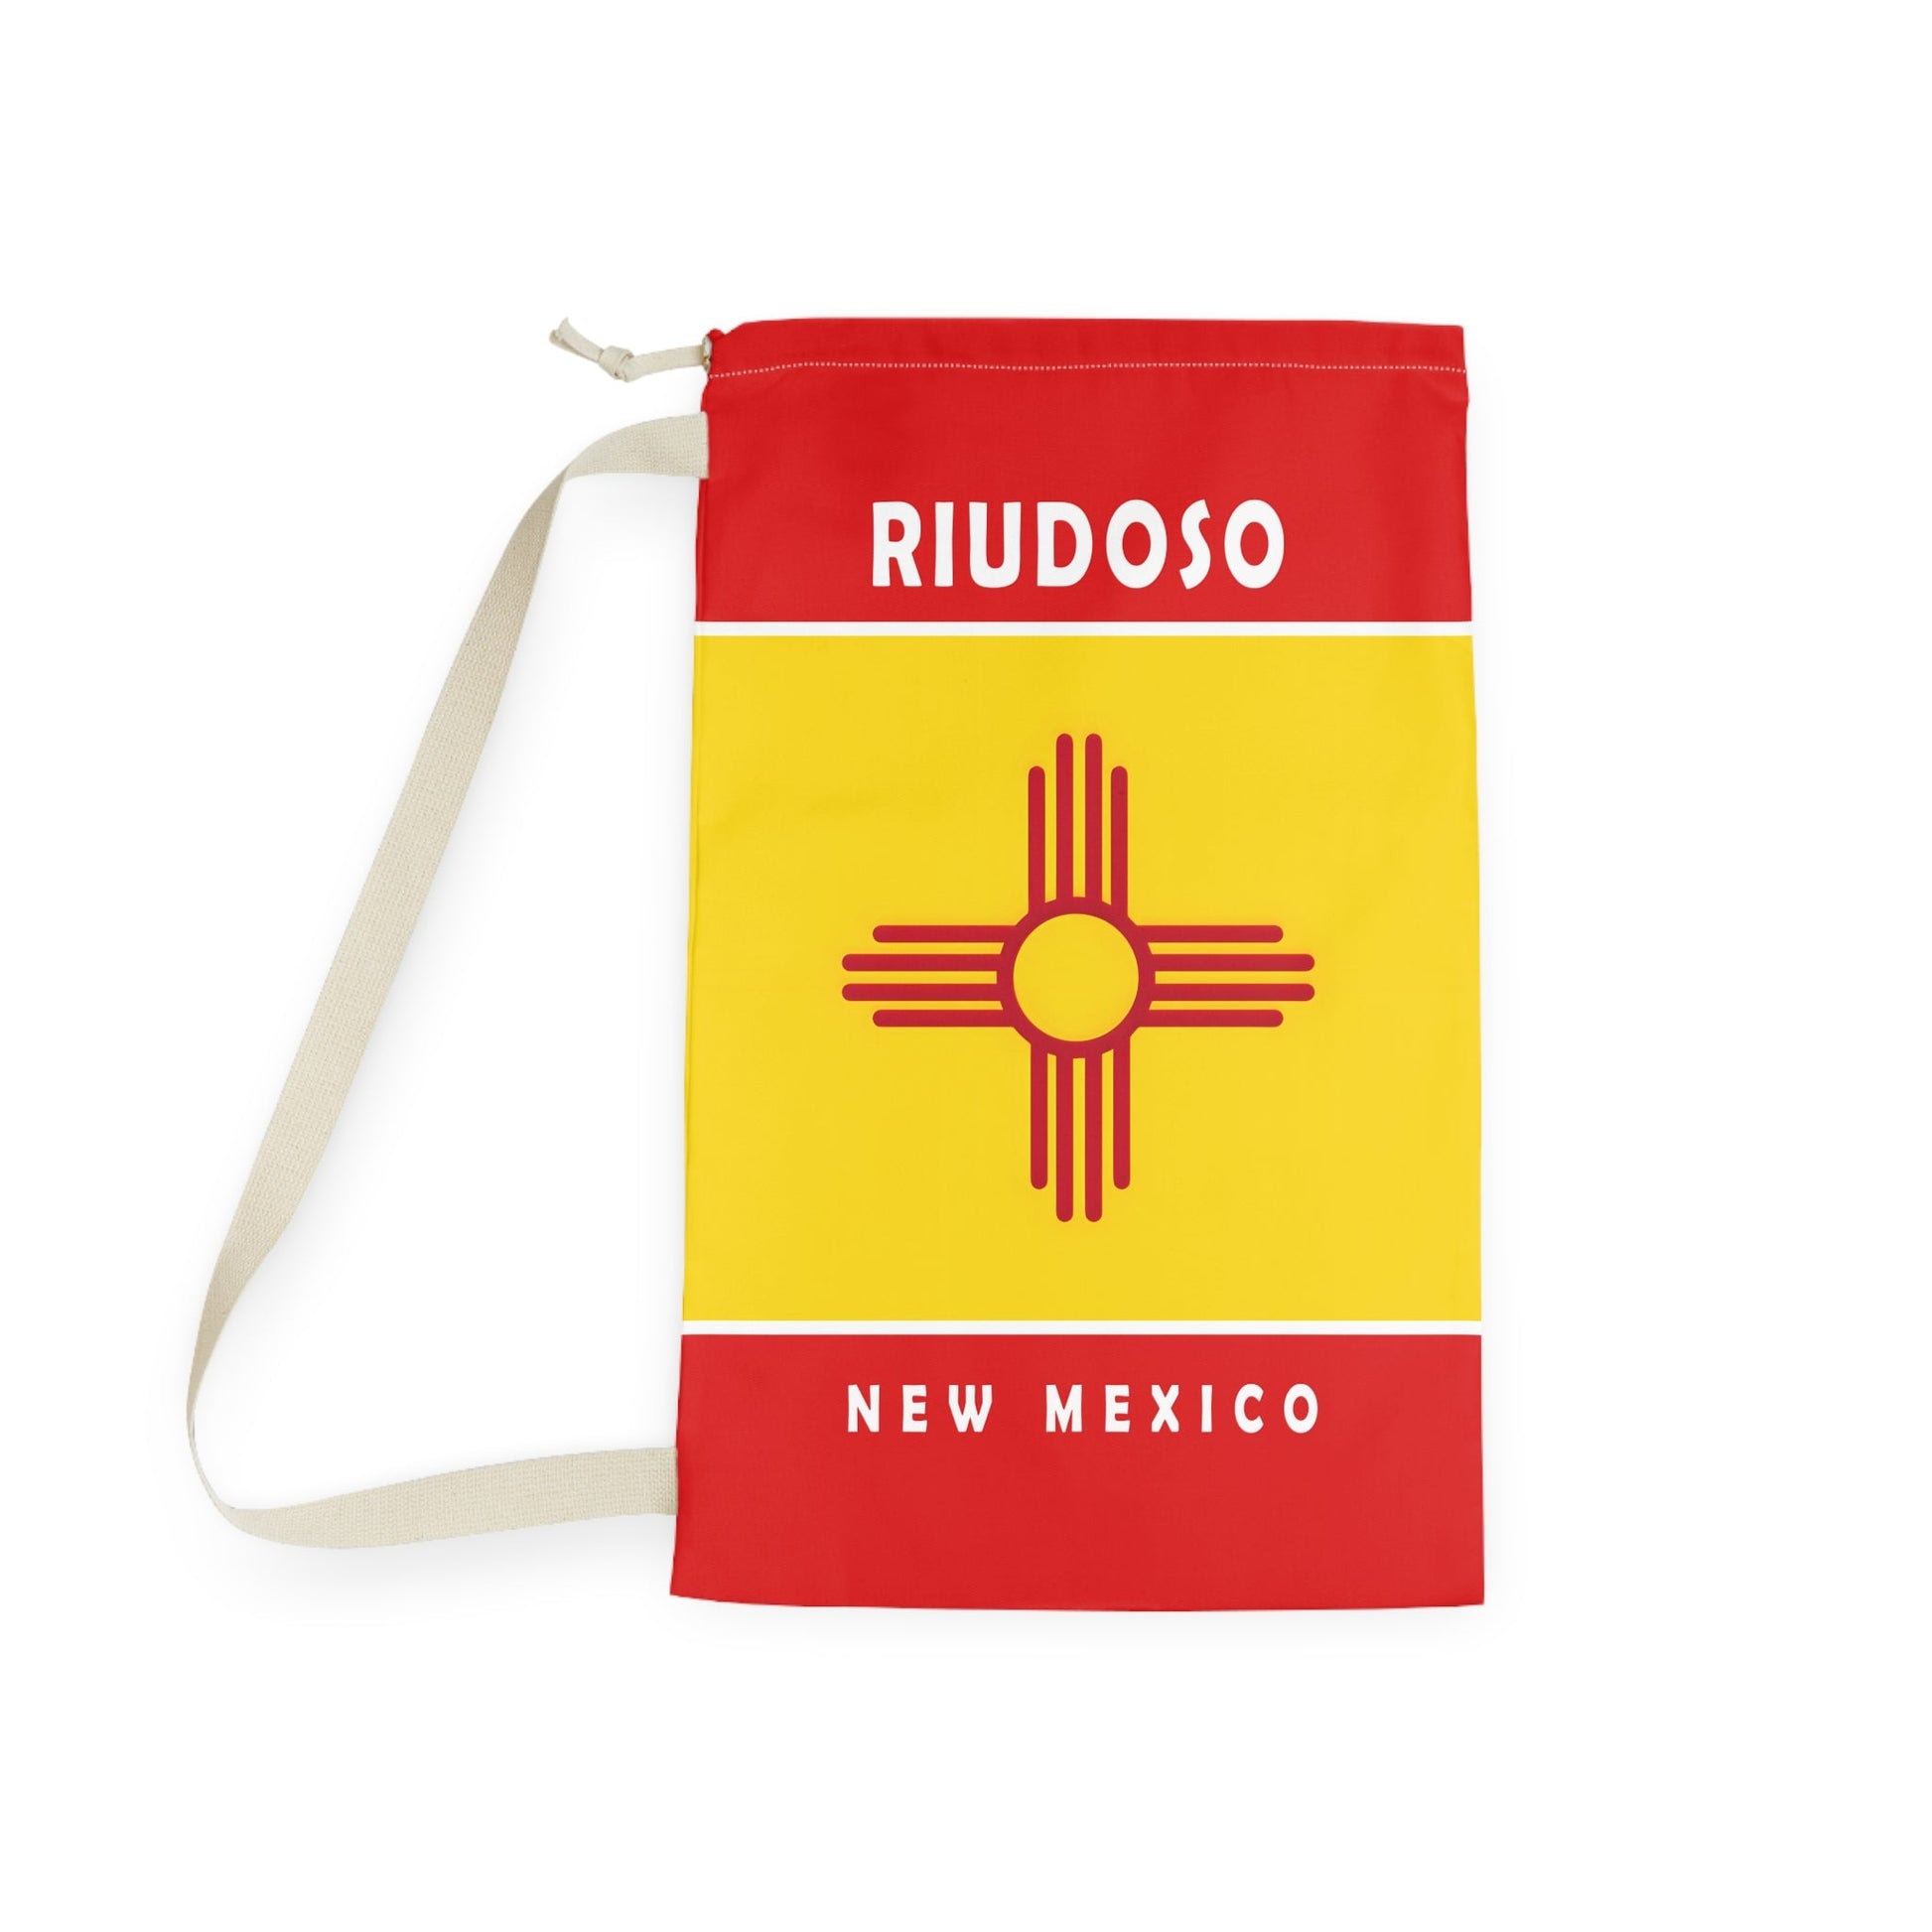 Los Alamos New Mexico Laundry Bag